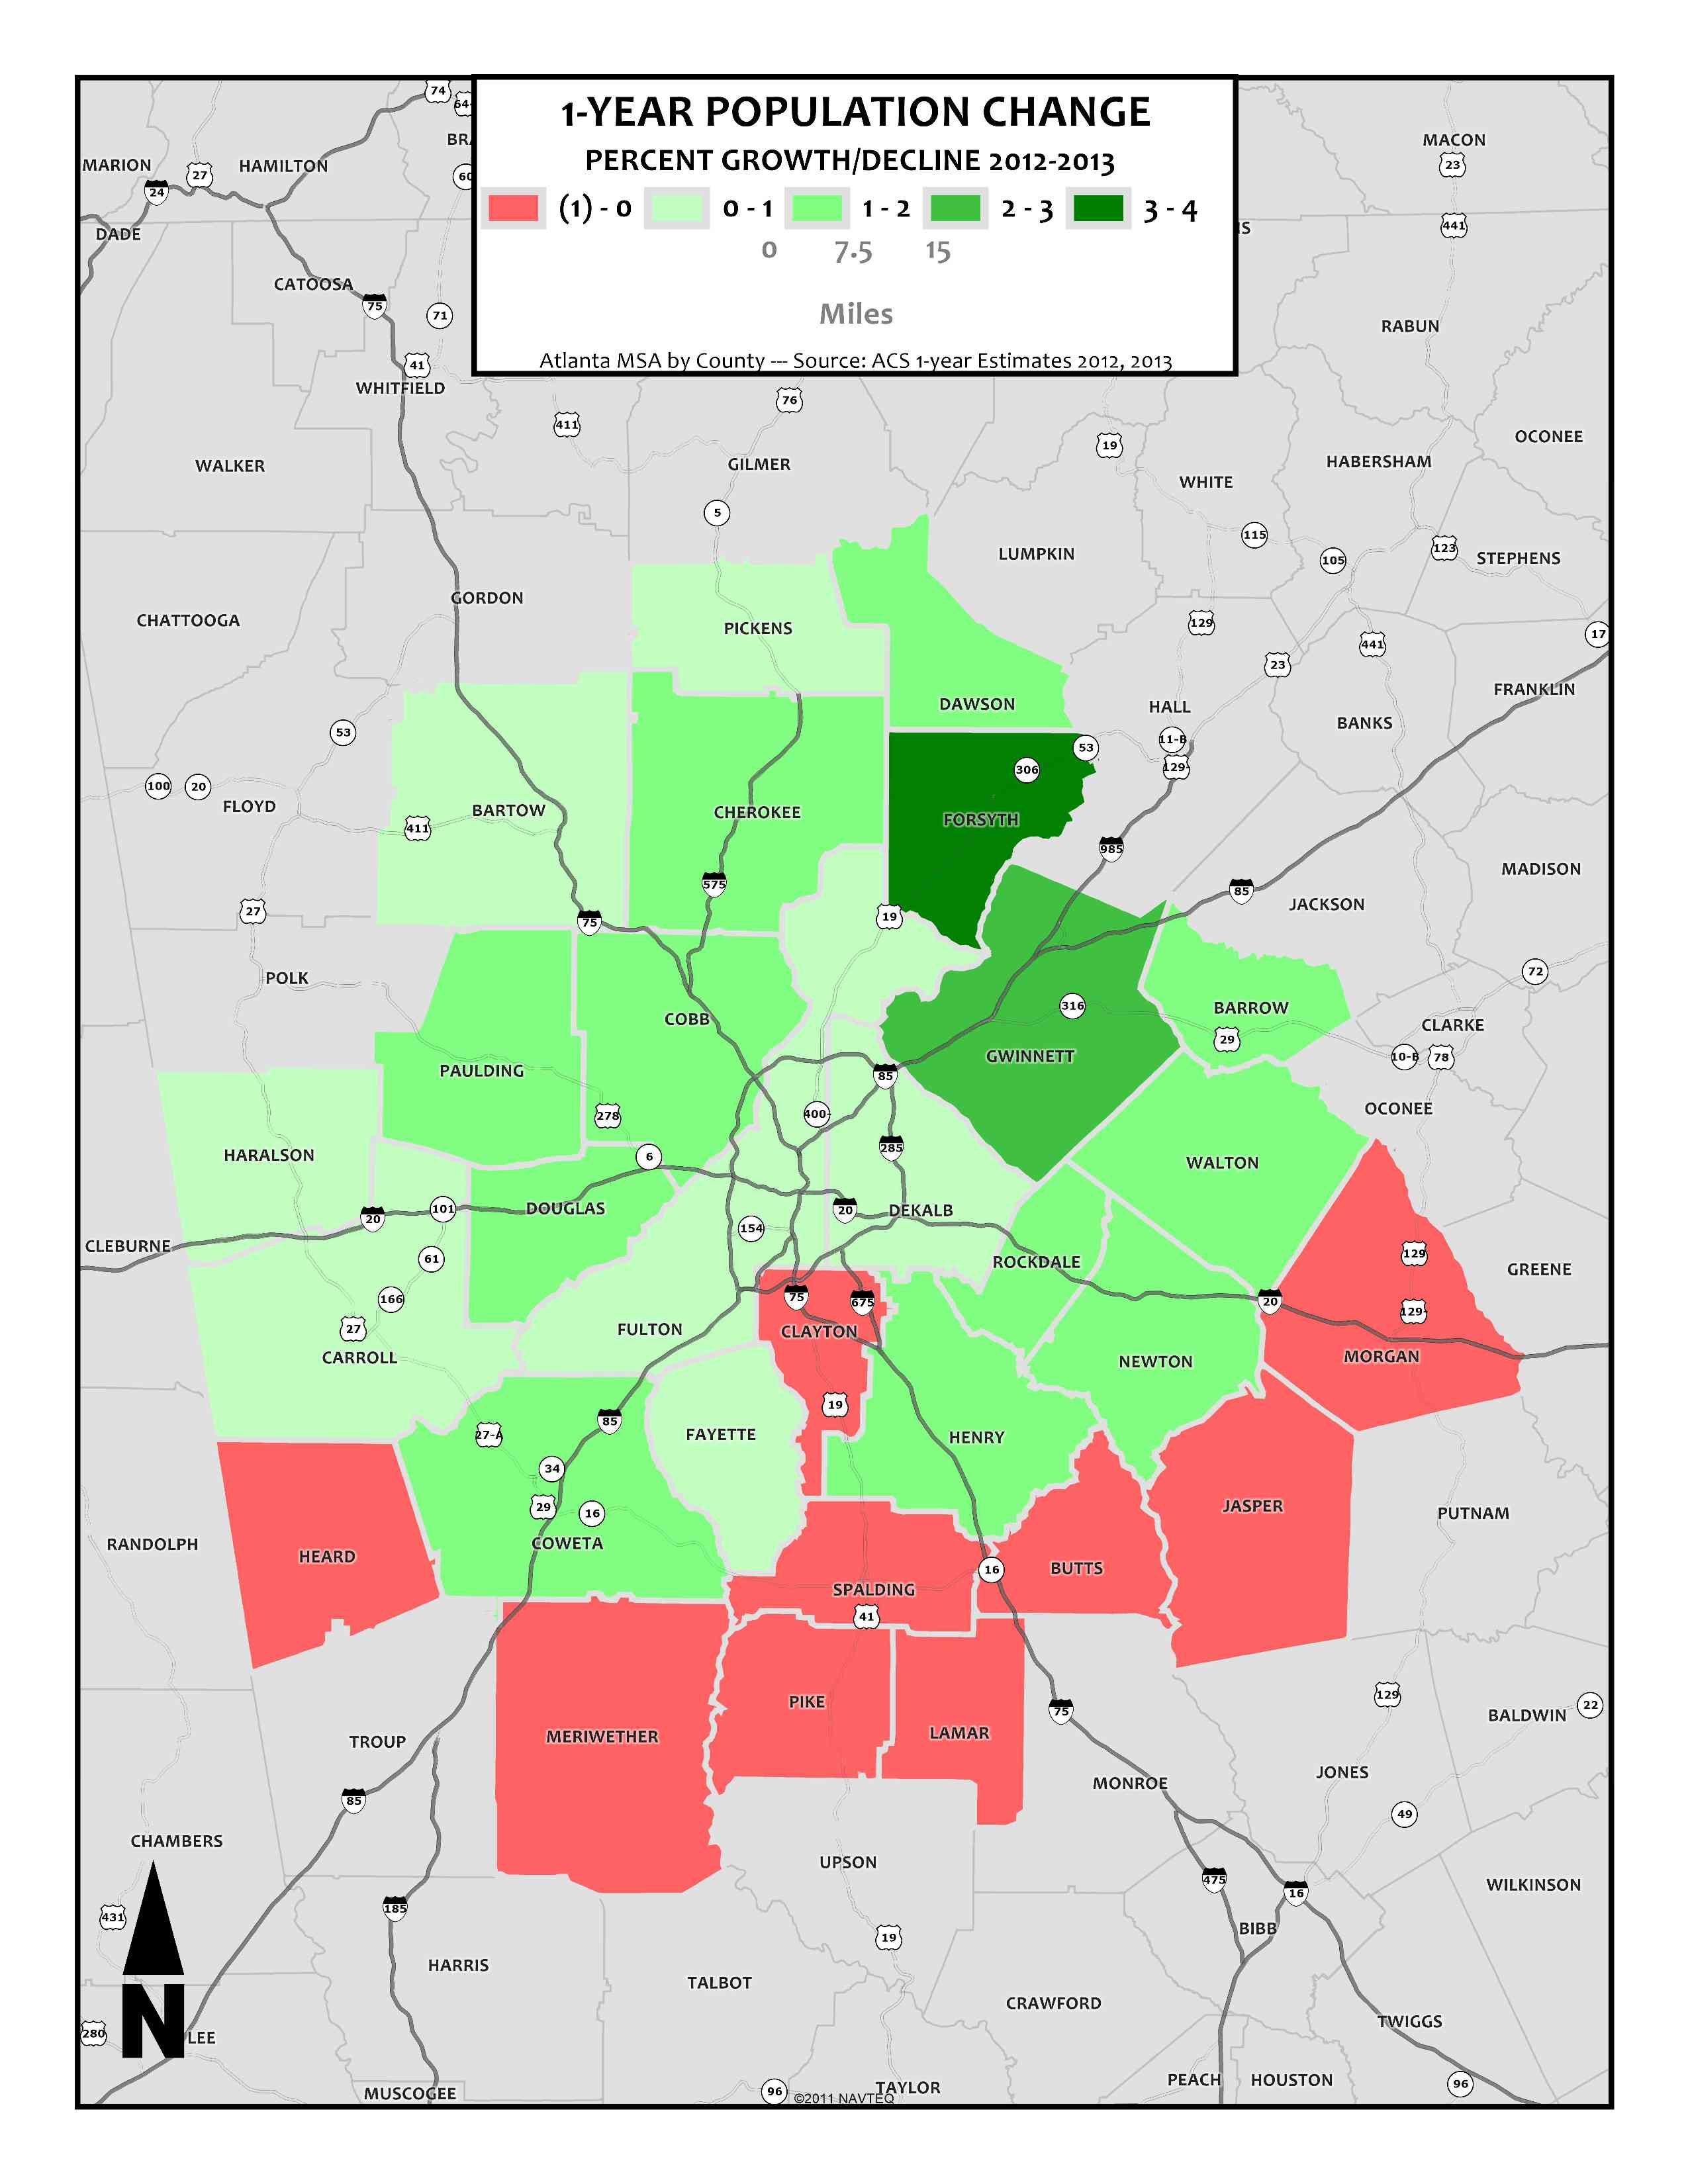 1-Year Population Change Percent, 2012-2013 – metro counties